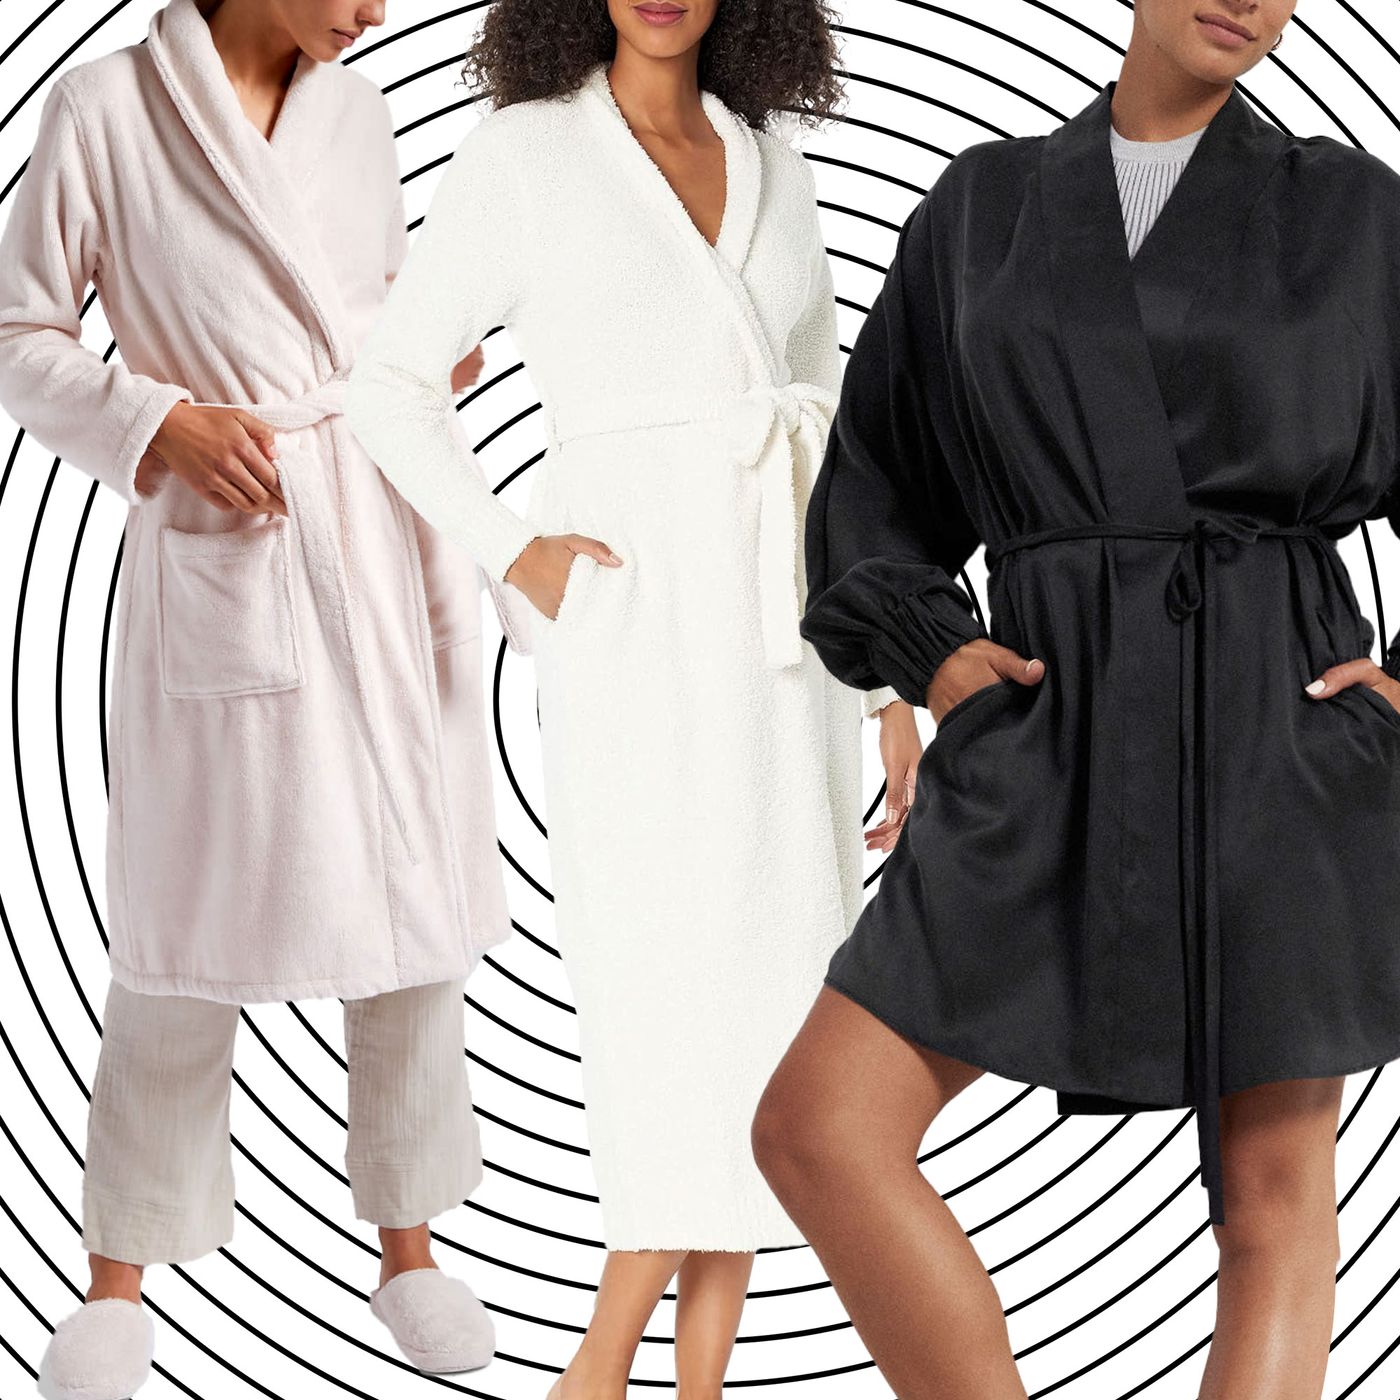 Long Robes for Women Winter Fleece Warm Couple Bathrobe Nightgown Fluffy  Super Soft Sleepwear Cozy Shower Spa Robe